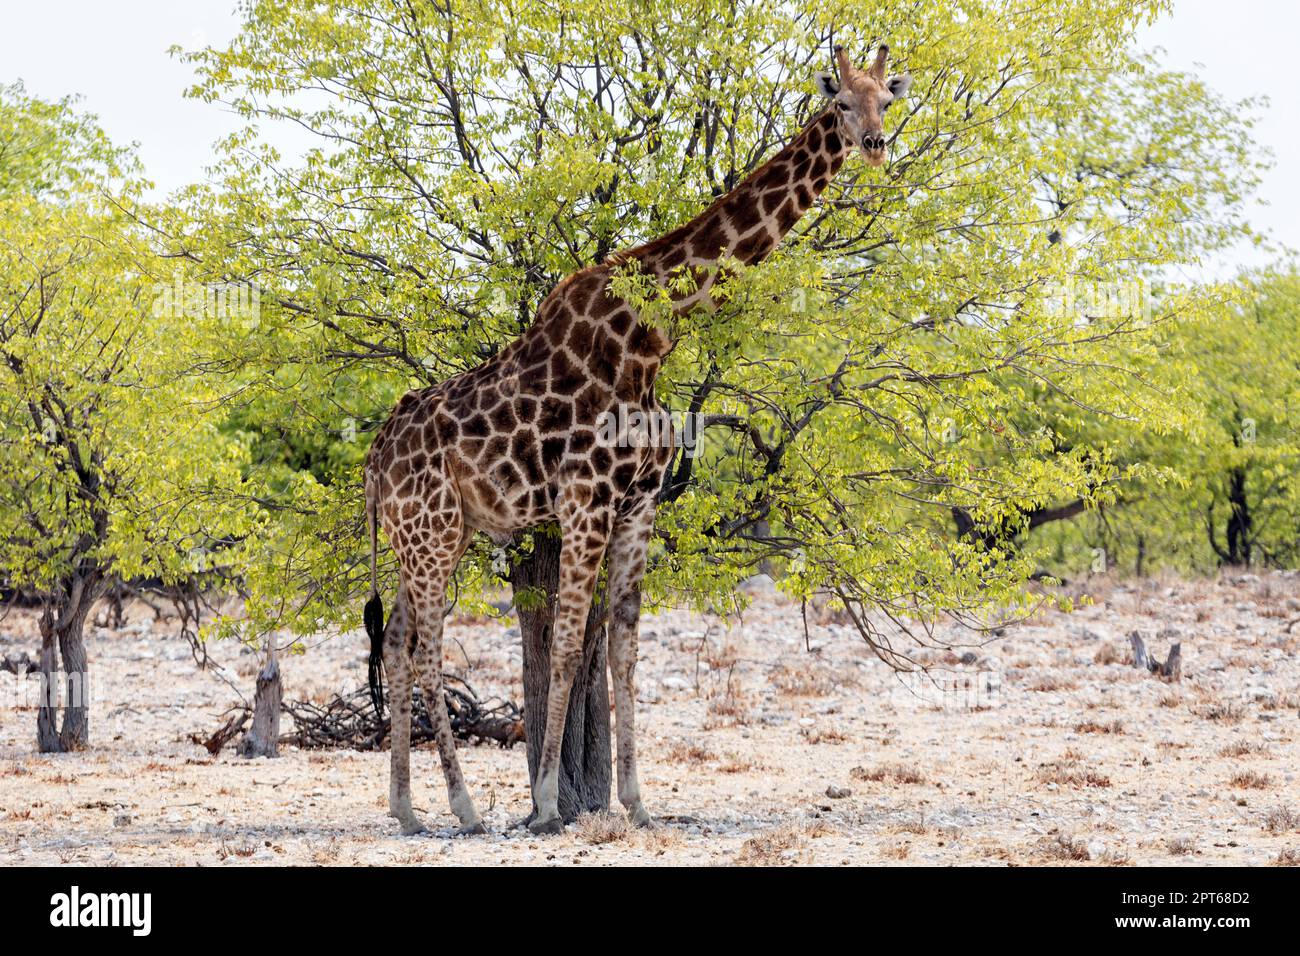 Giraffe (Giraffa), Etosha-Nationalpark, Namibia Foto Stock